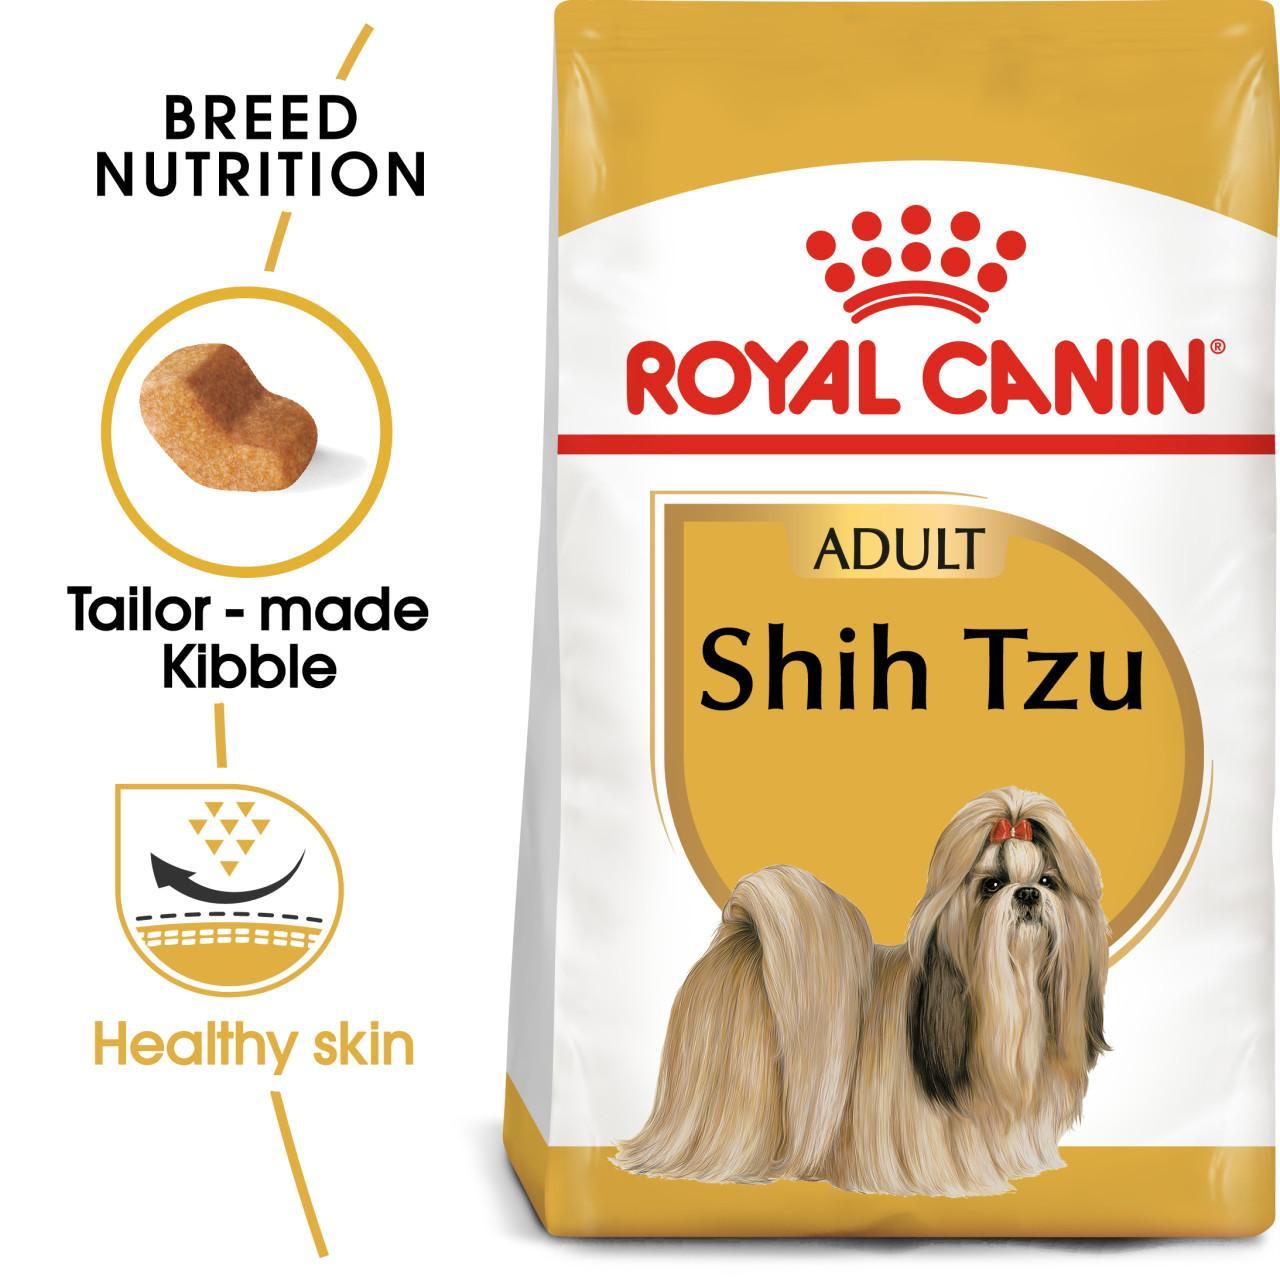 An image of Royal Canin Shih Tzu